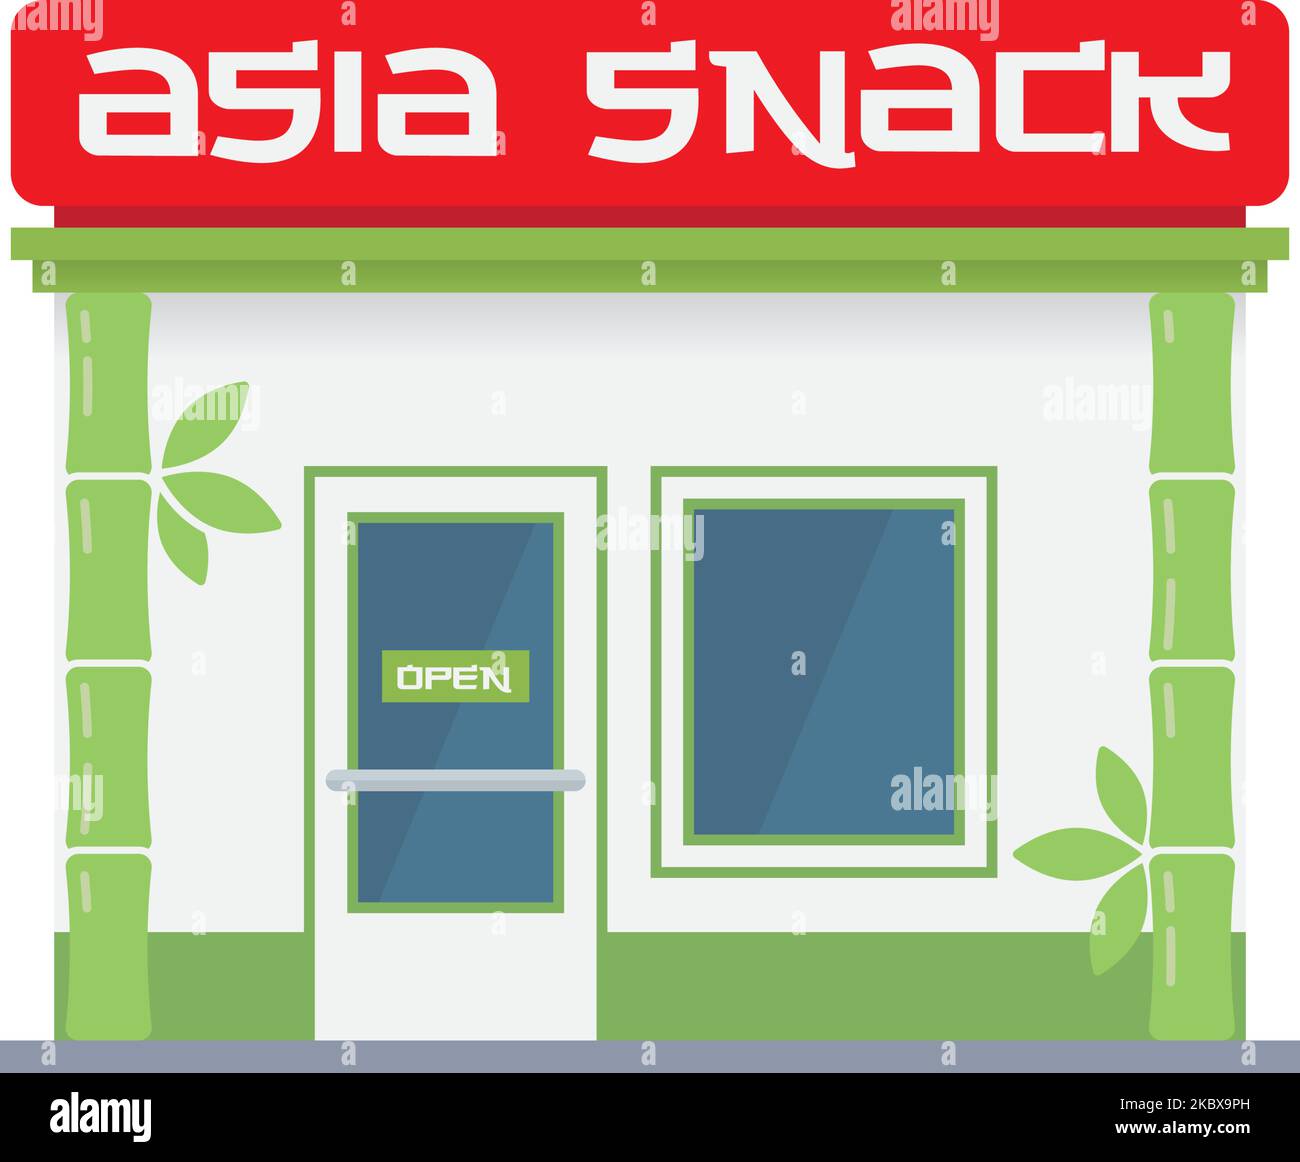 Isolierte flache Design asiatische Lebensmittel Snack Bar Gebäude Fassade Vektor Illustration Stock Vektor